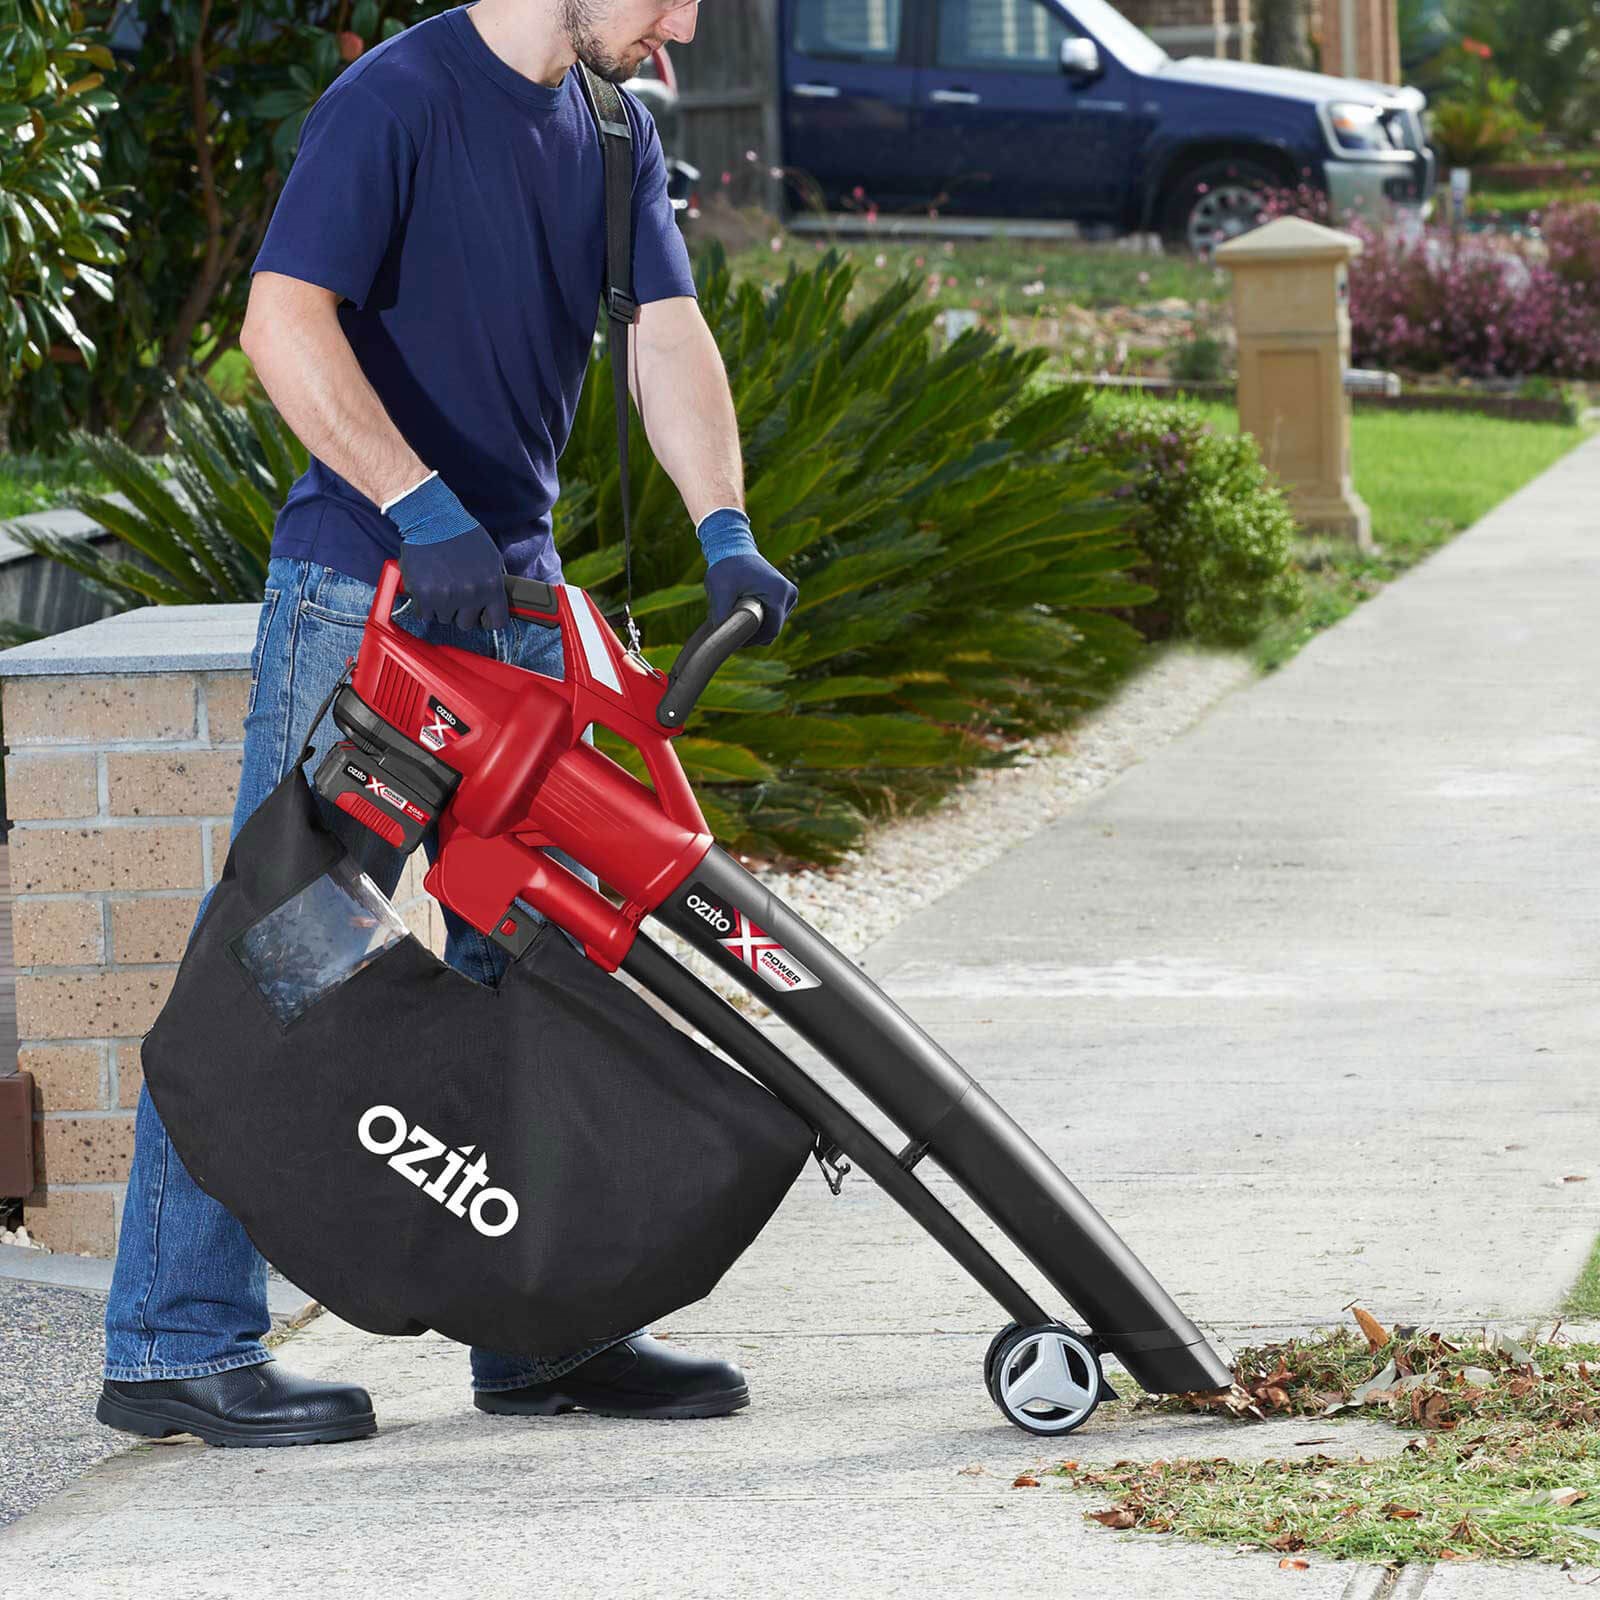 Ozito PXC 45L Garden Dust Collecting Blower Vacuum Bag